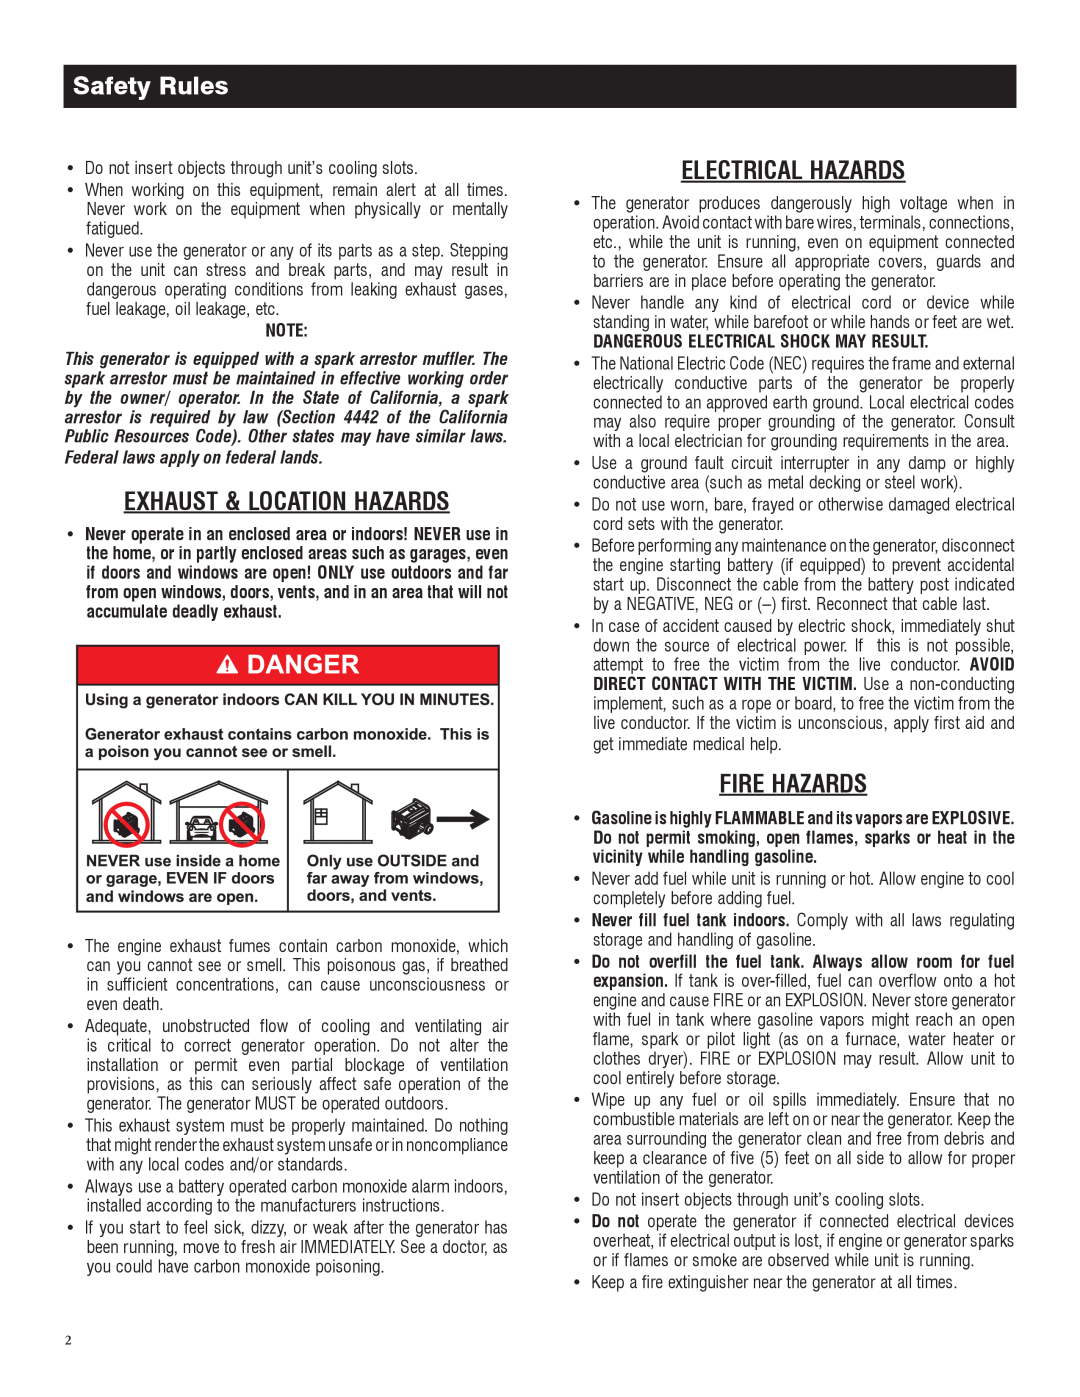 Generac 005982-0, 5982R owner manual Safety Rules, Exhaust & Location Hazards, Electrical Hazards, Fire Hazards 